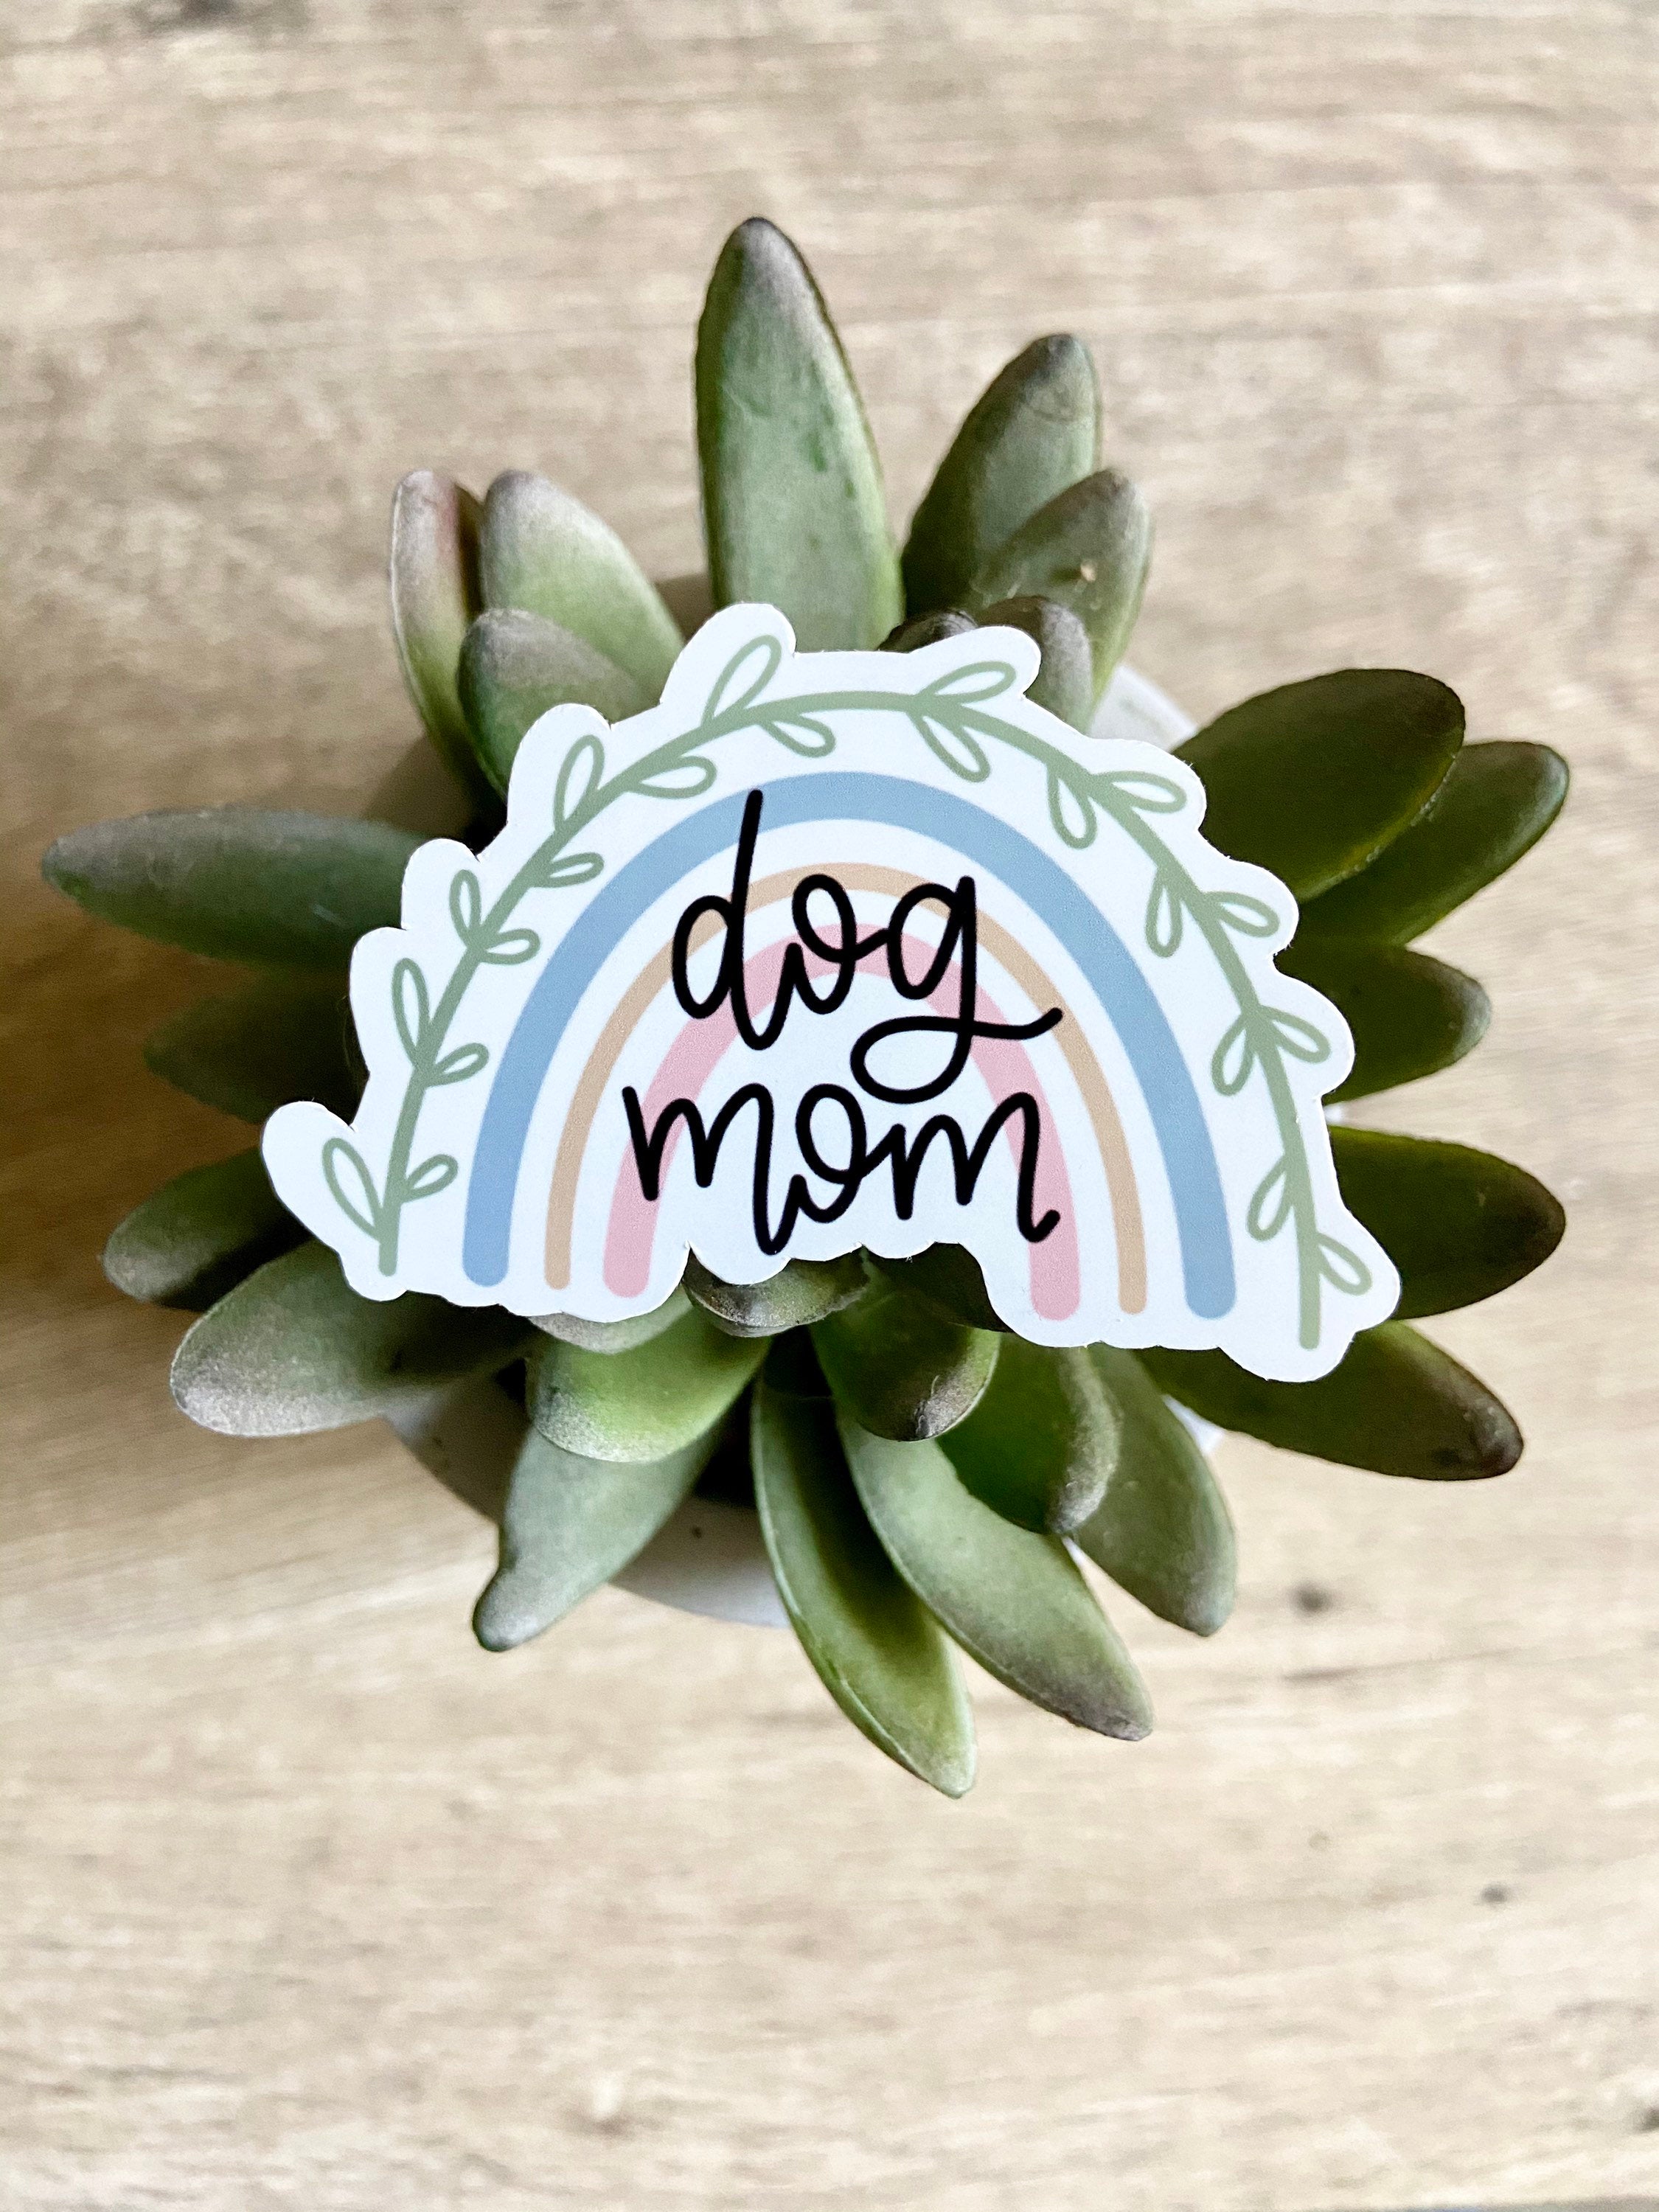 Dog Mom, Must Love Dogs Sticker, Stickers, Cute Stickers, Rescue Mom Sticker, Dogs>People Sticker